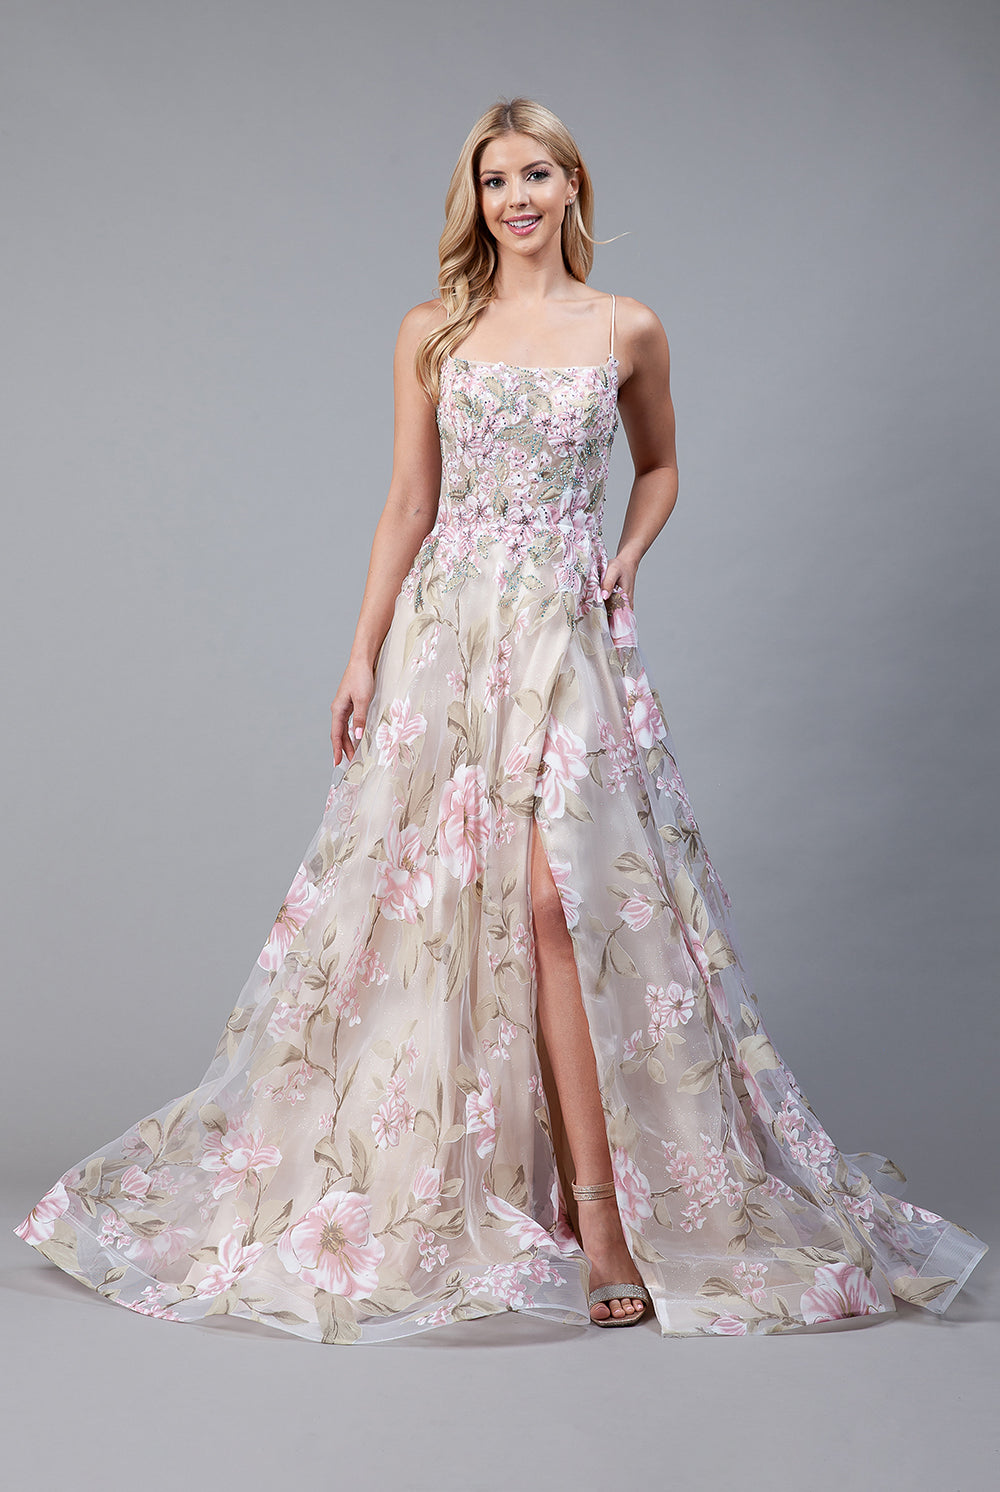 Embroidered Flowers Straight Across Side Slit Long Prom Dress AC2105-Prom Dress-smcfashion.com